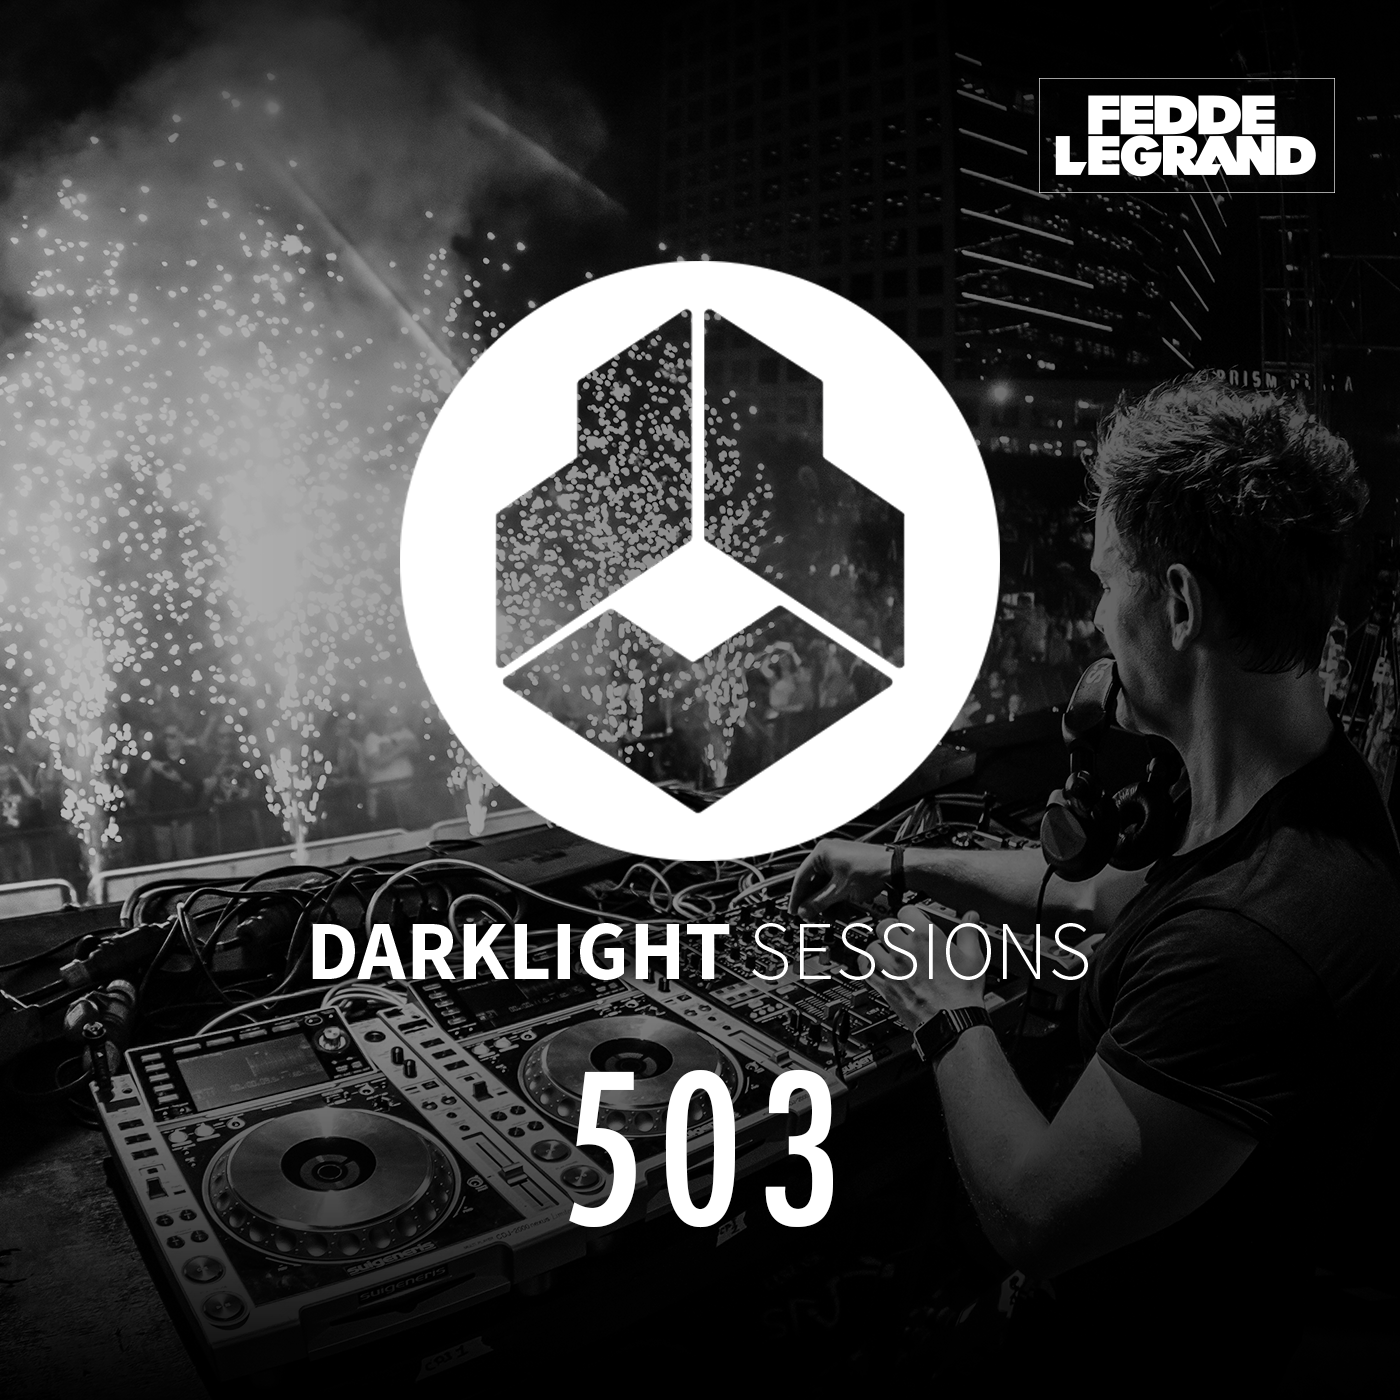 Darklight Sessions 503